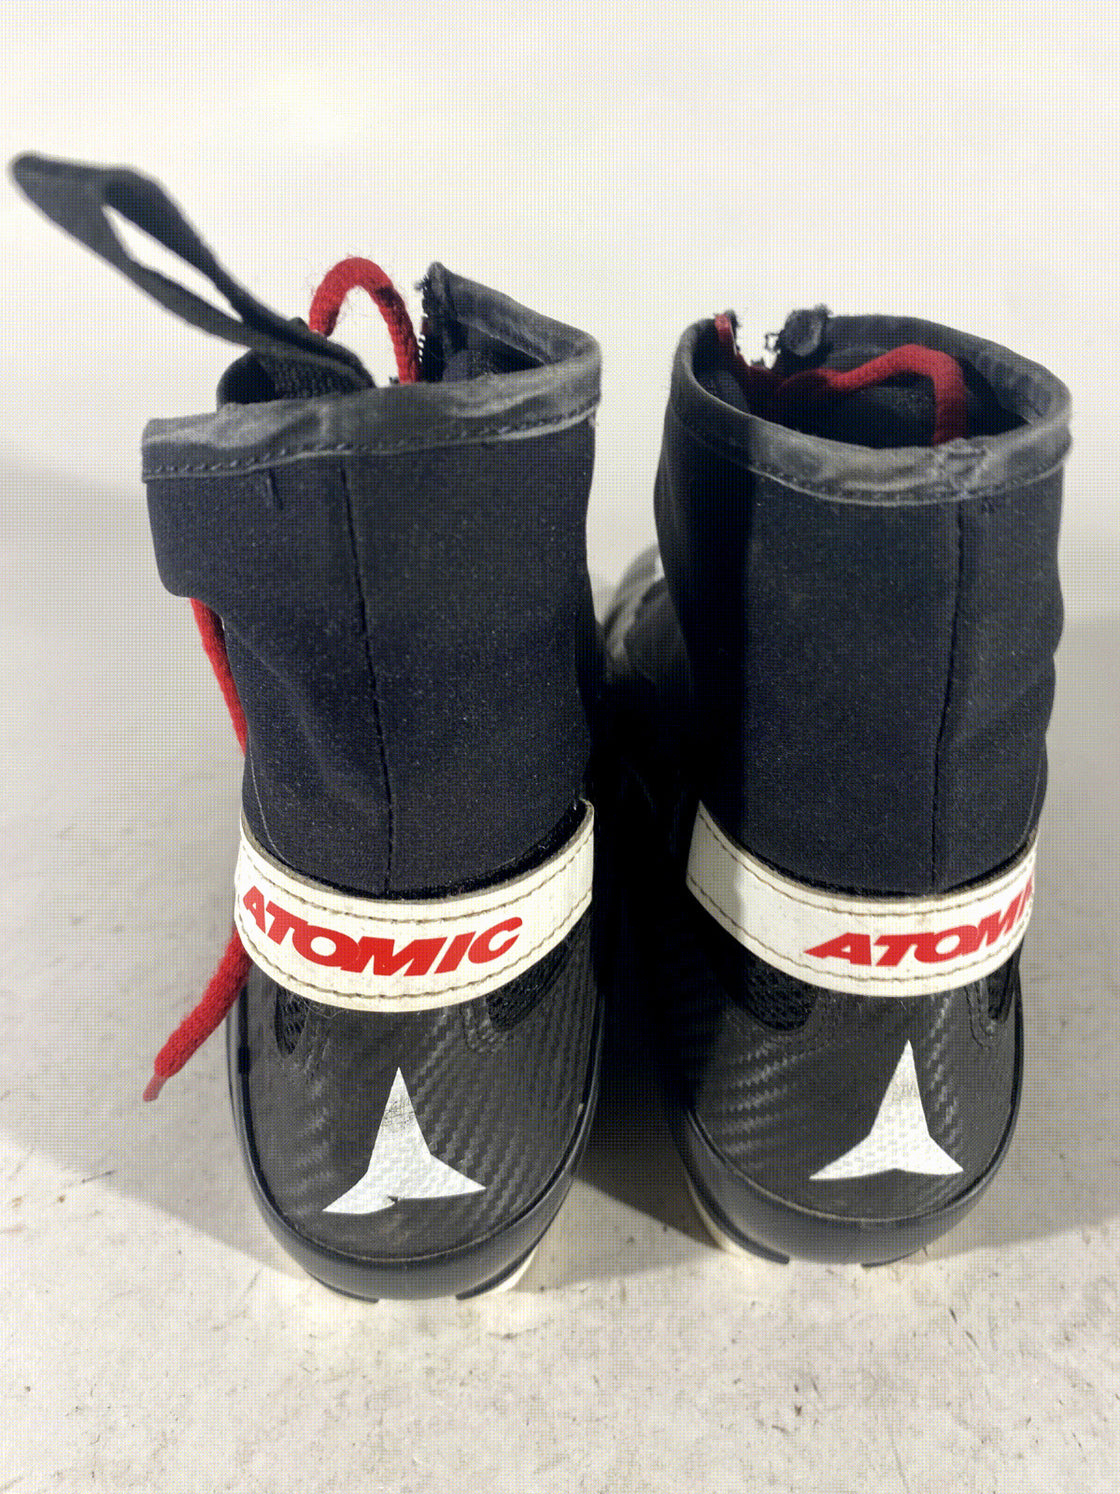 Atomic Classic Sport Nordic Cross Country Ski Boots Size EU44 US10 SNS Pilot